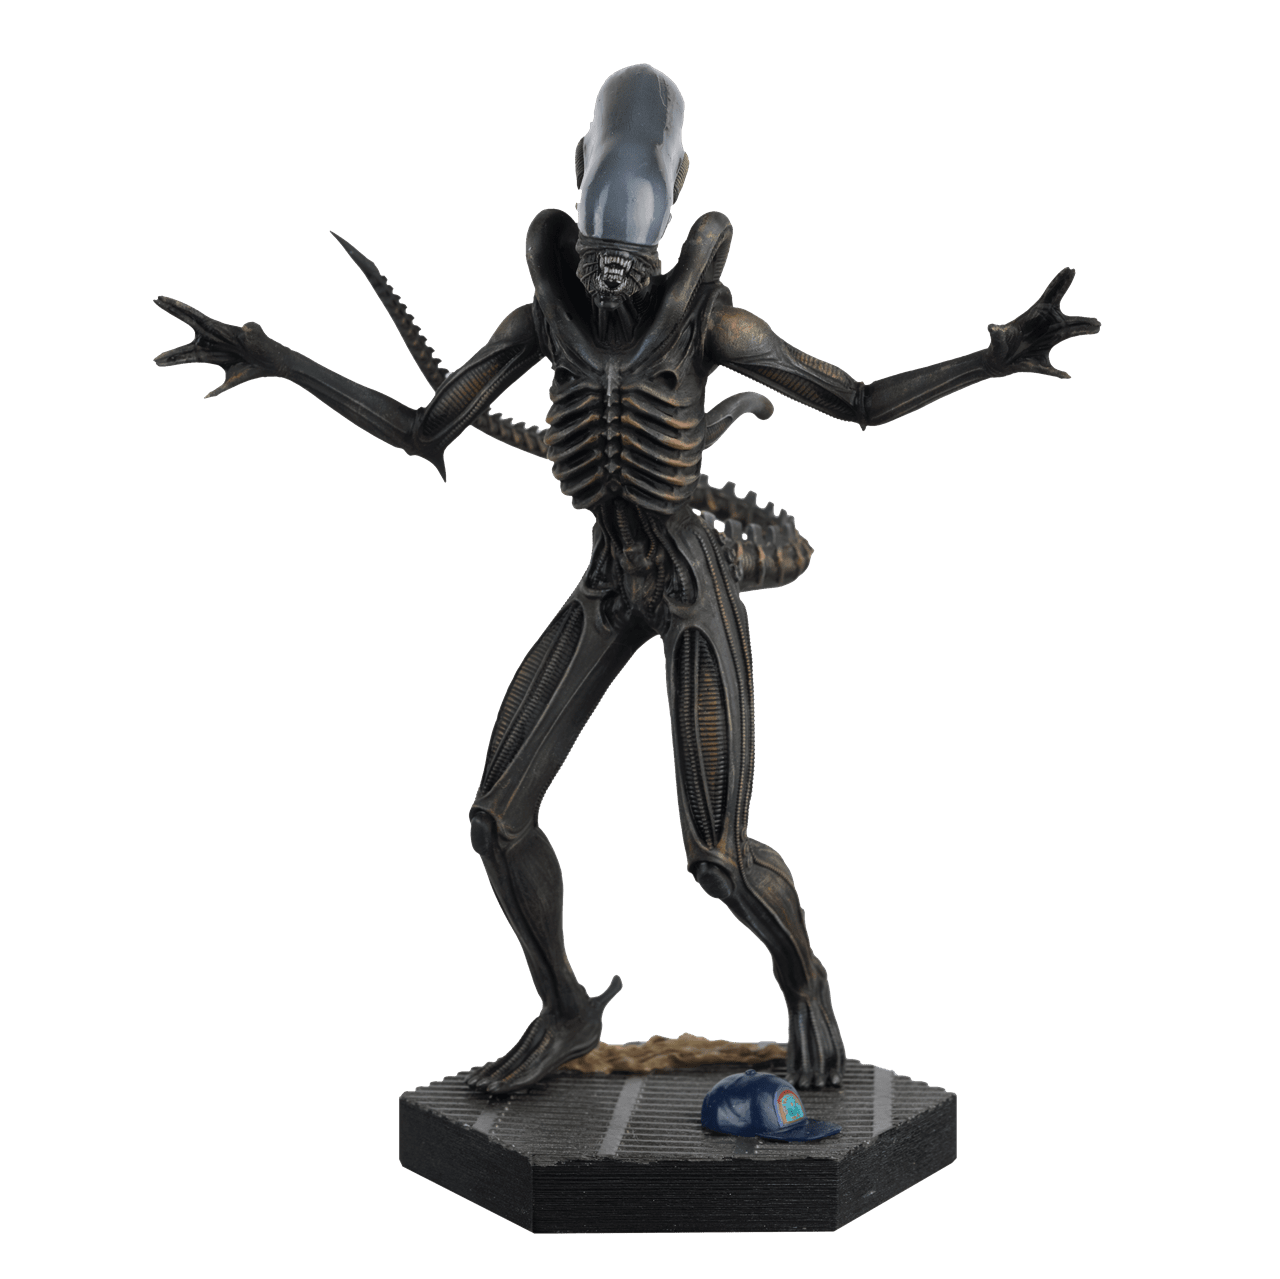 alien figurines for sale